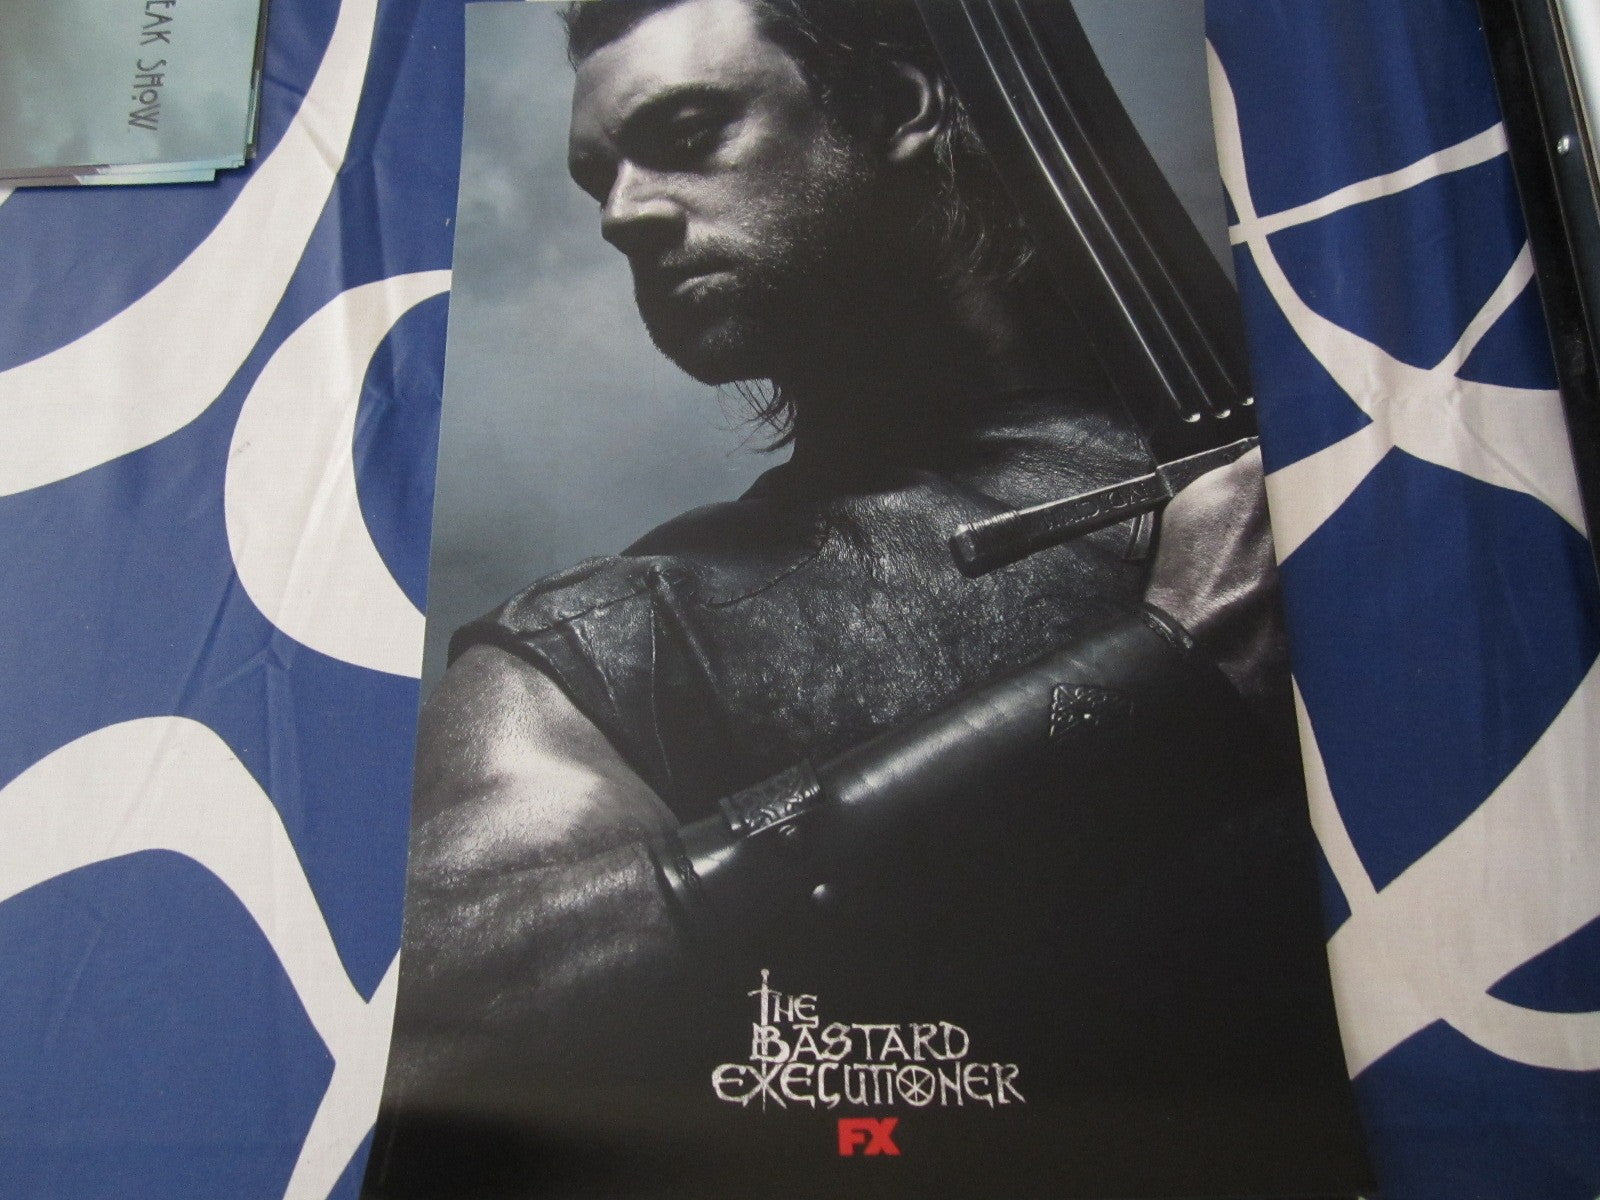 Bastard Executioner 2015 San Diego Comic-Con mini 11x17 FX promo poster